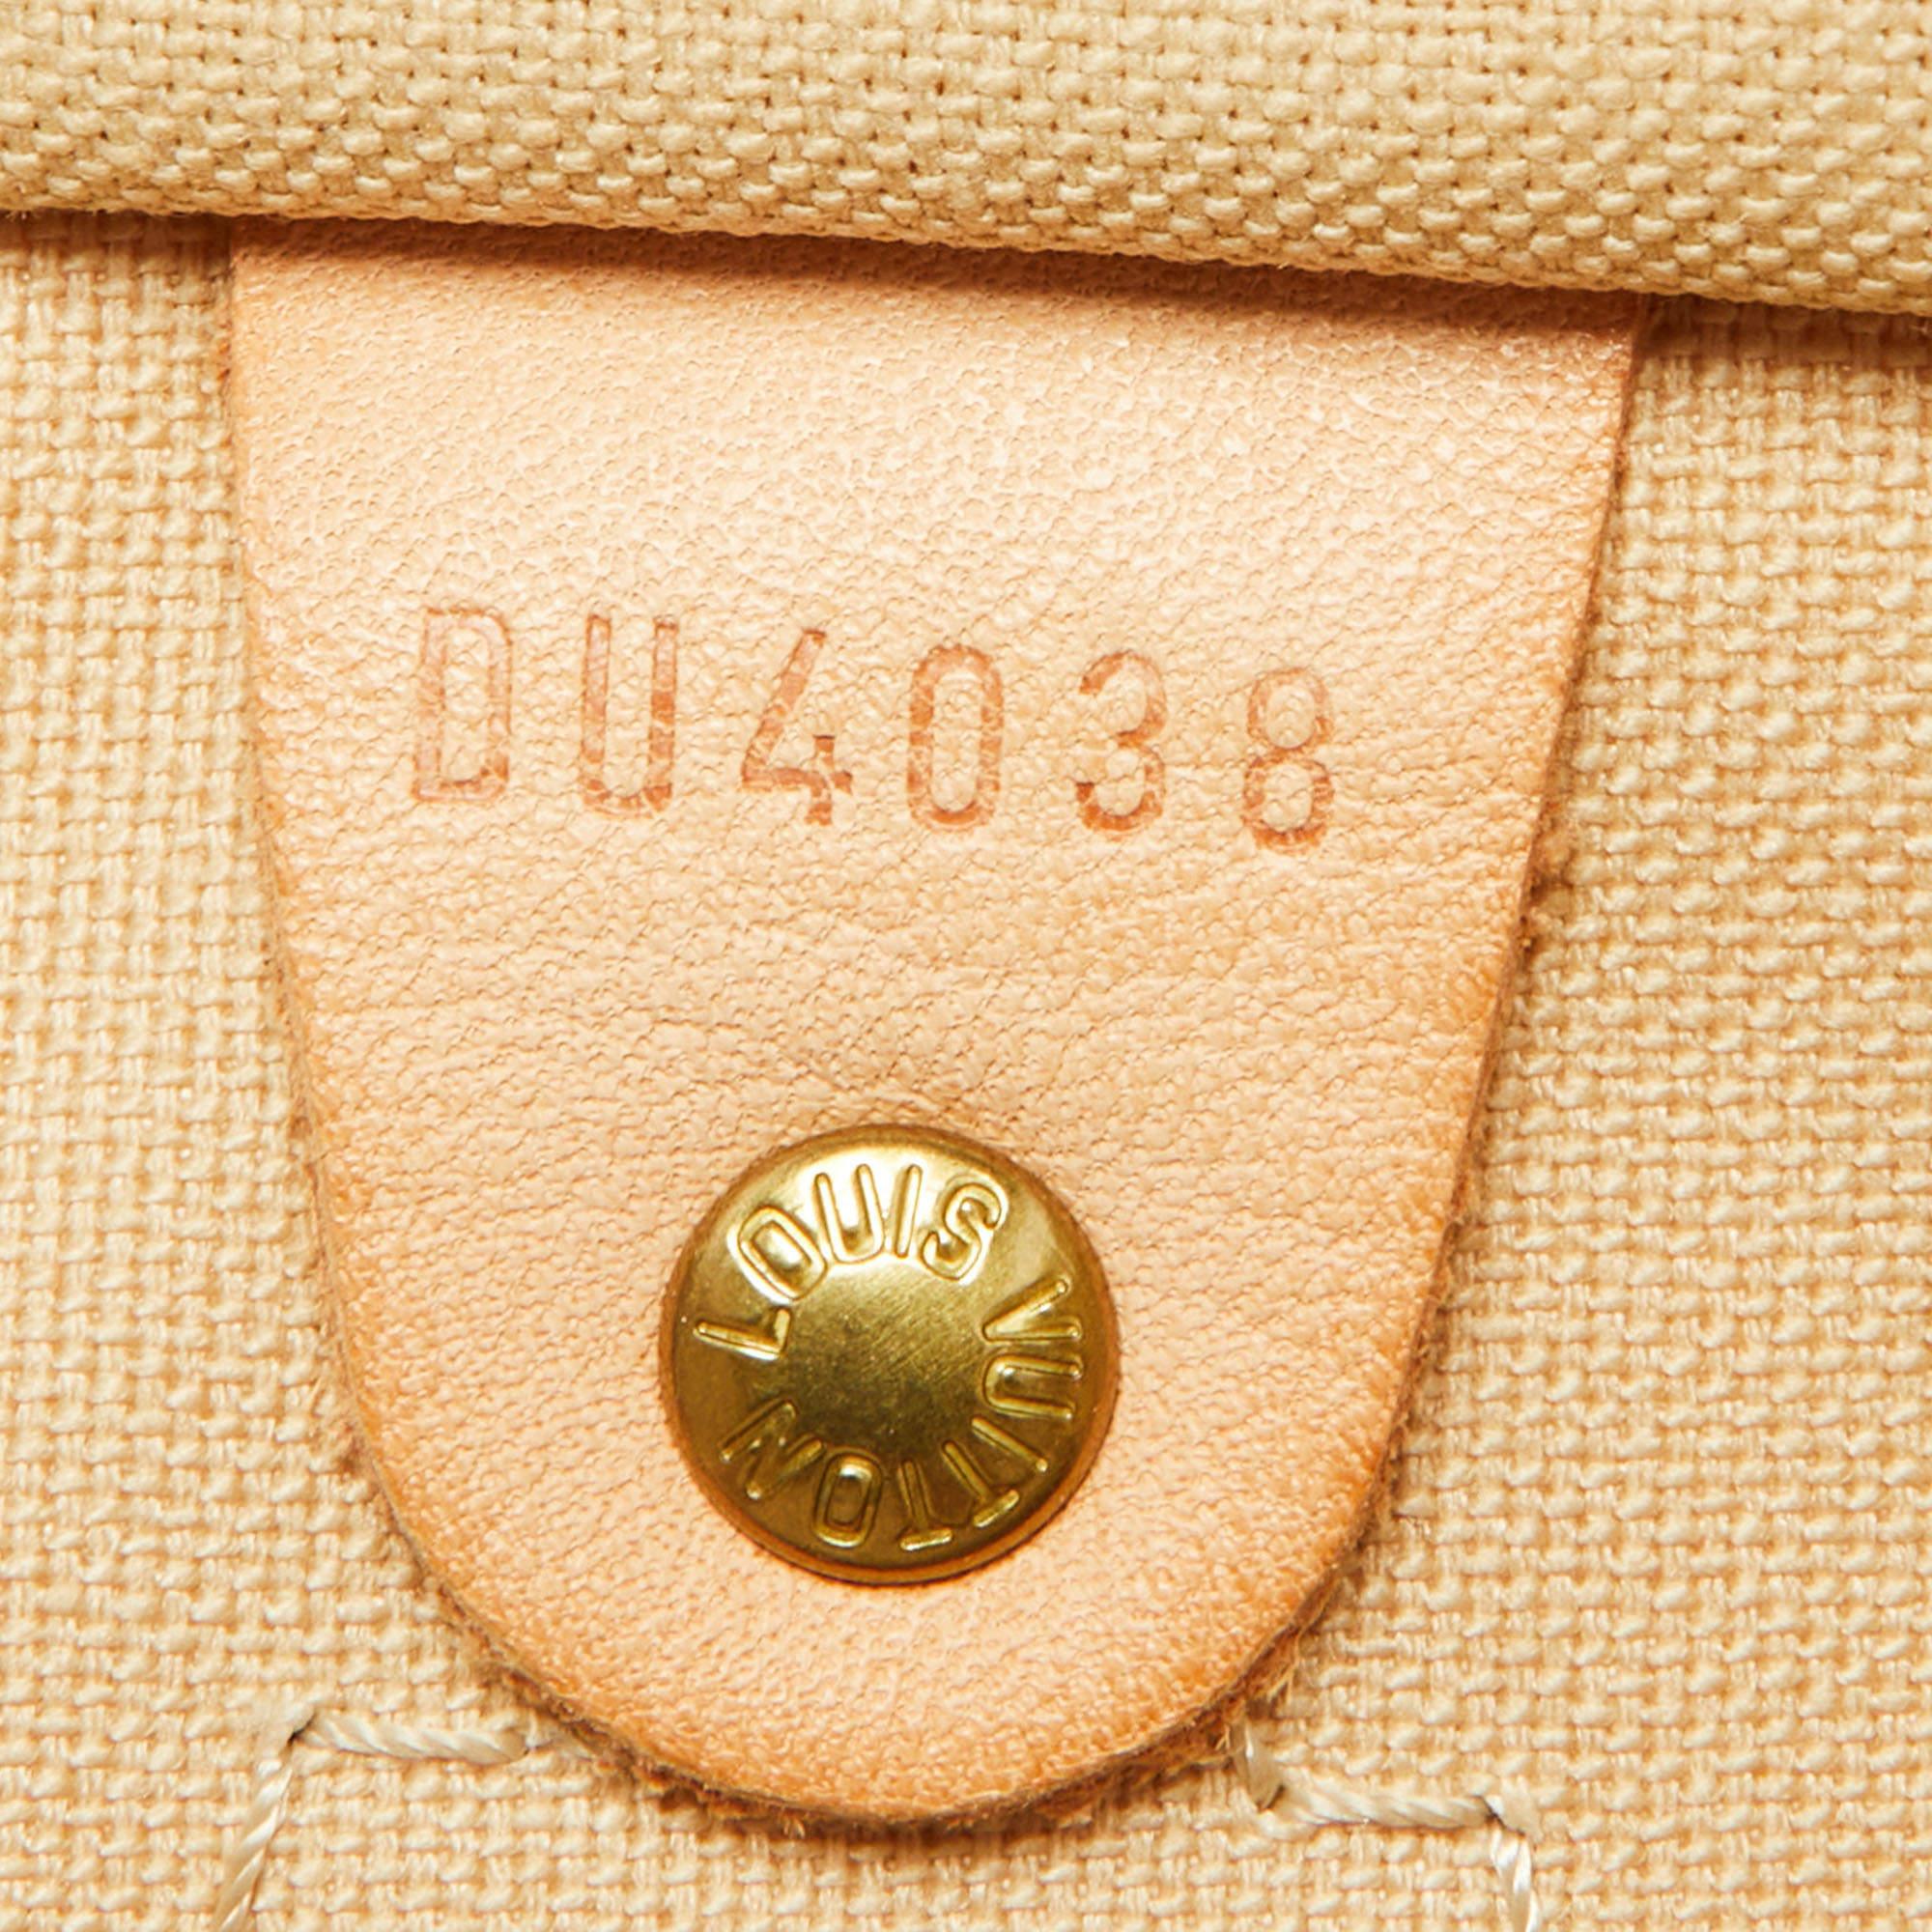 Louis Vuitton Damier Azur Canvas Speedy 35 Bag 7